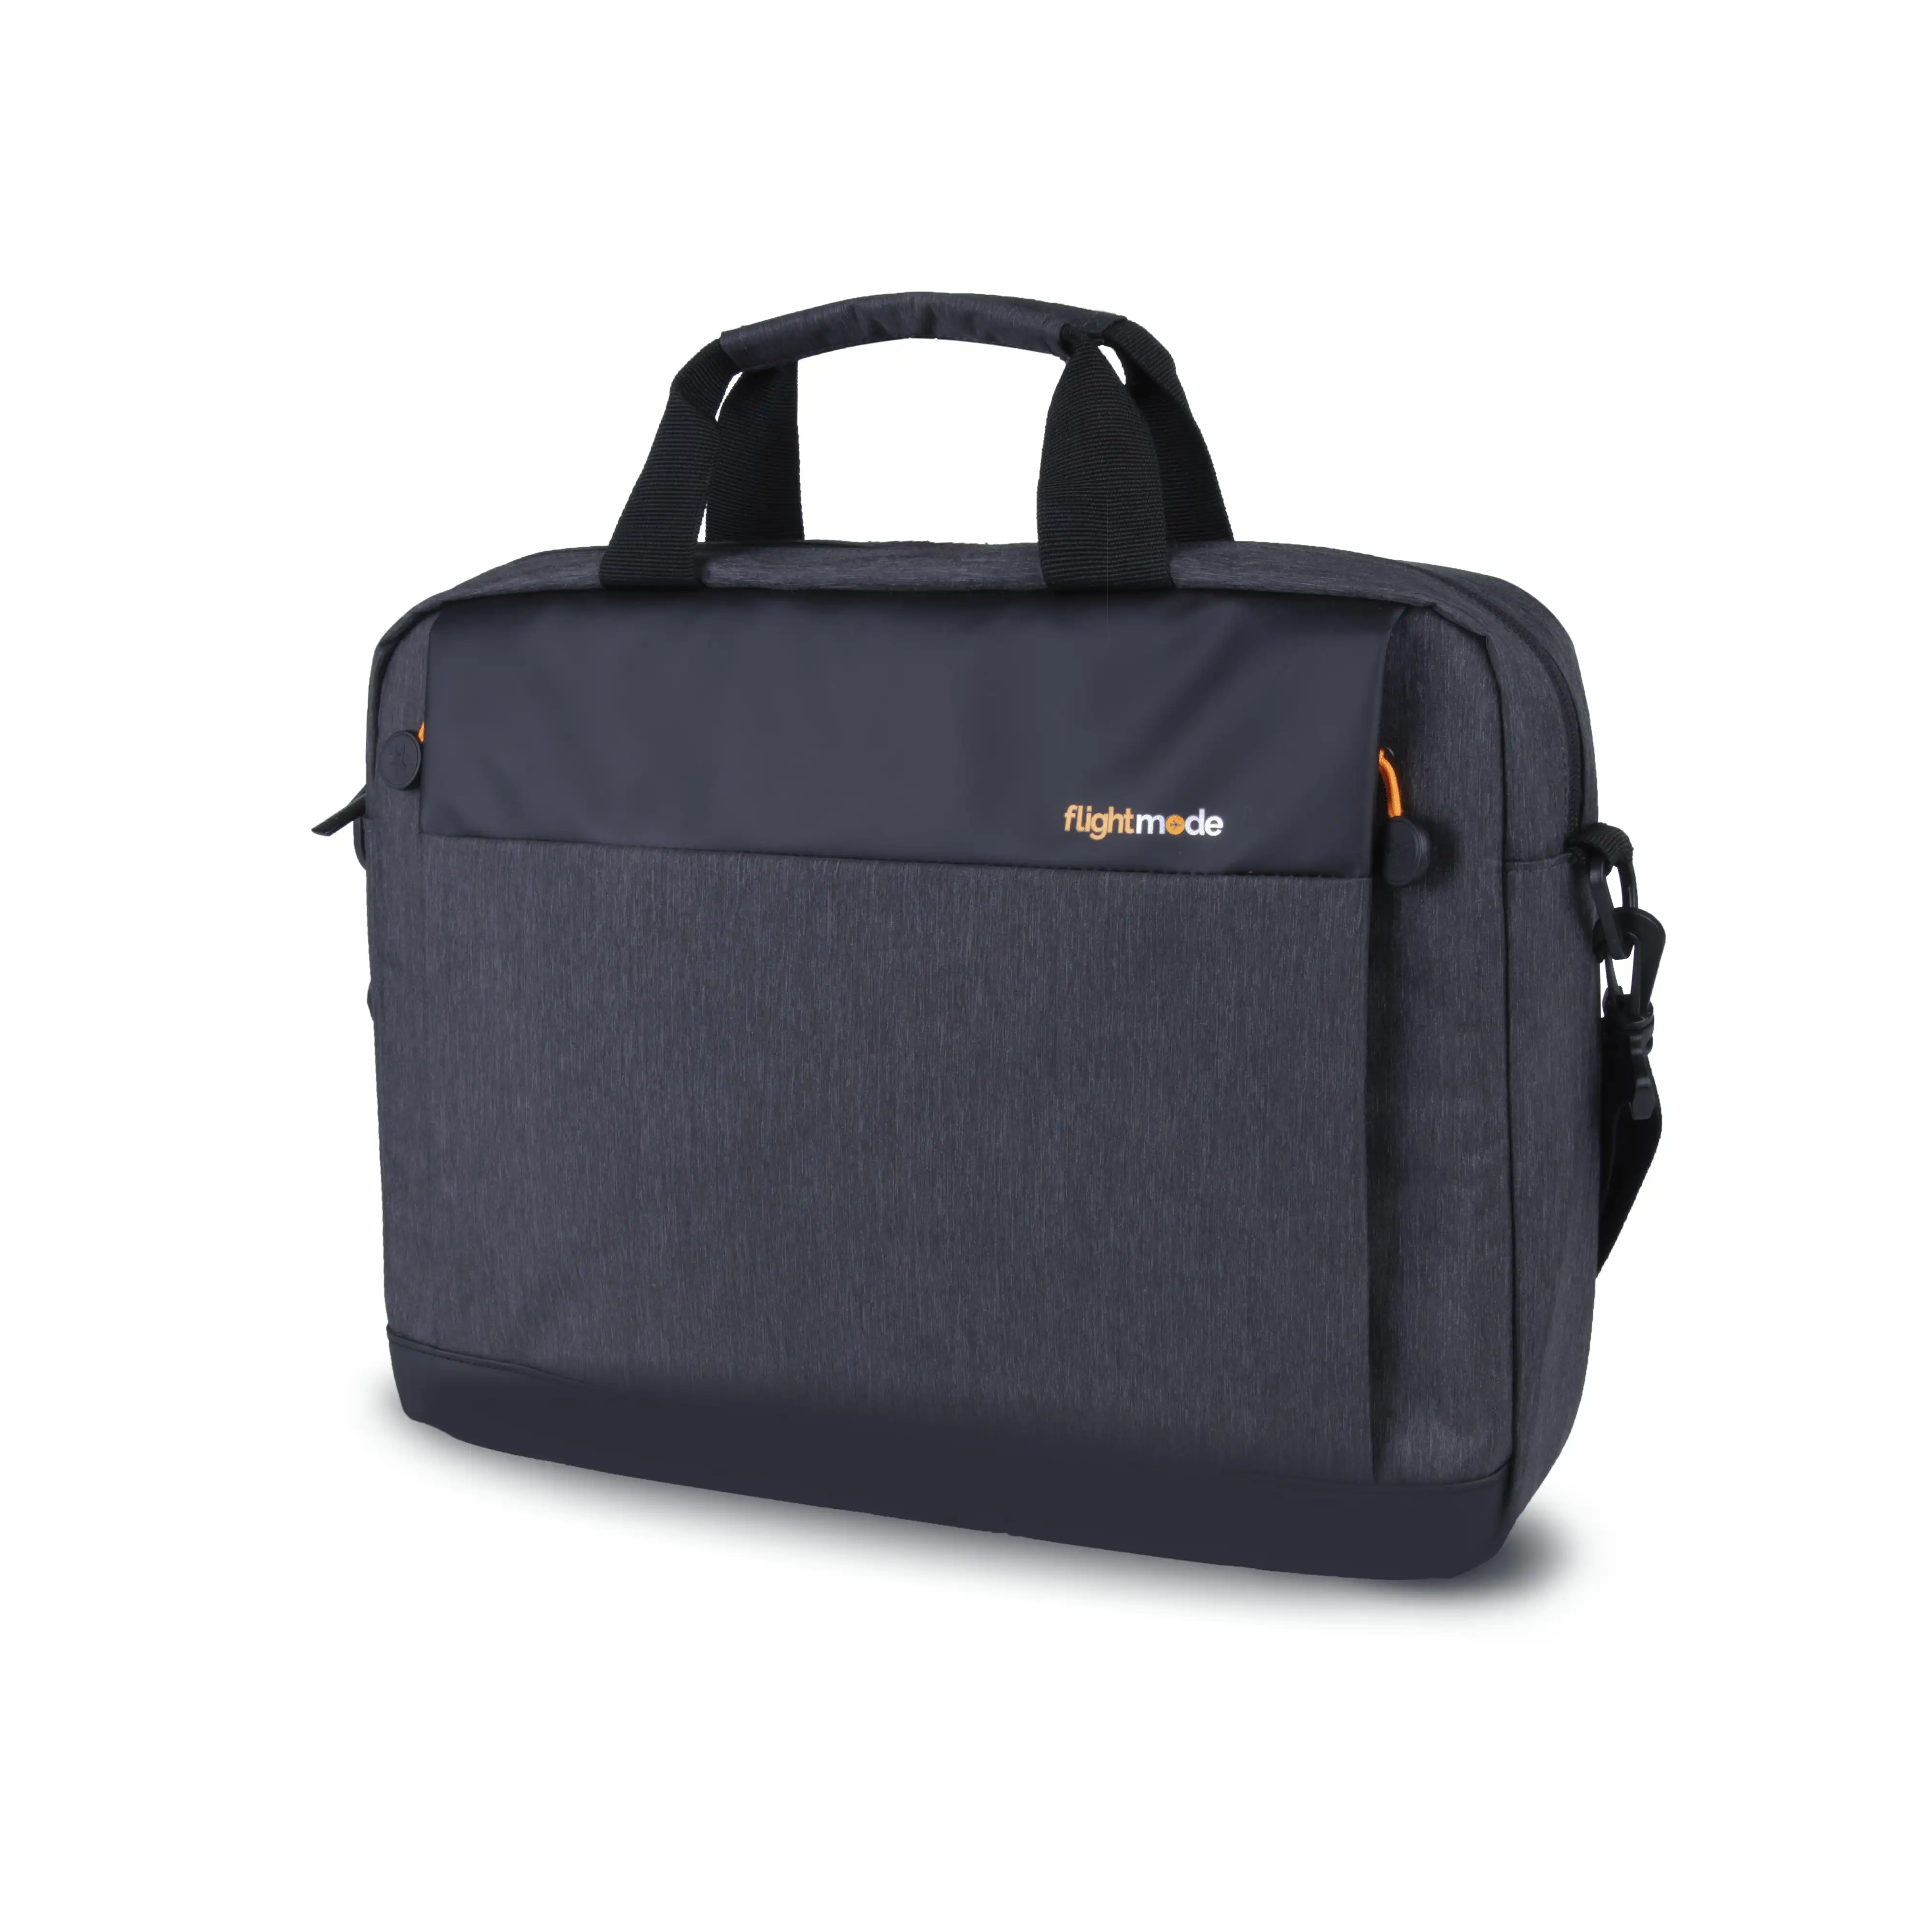 Flightmode Laptop Messenger Bag - Charcoal